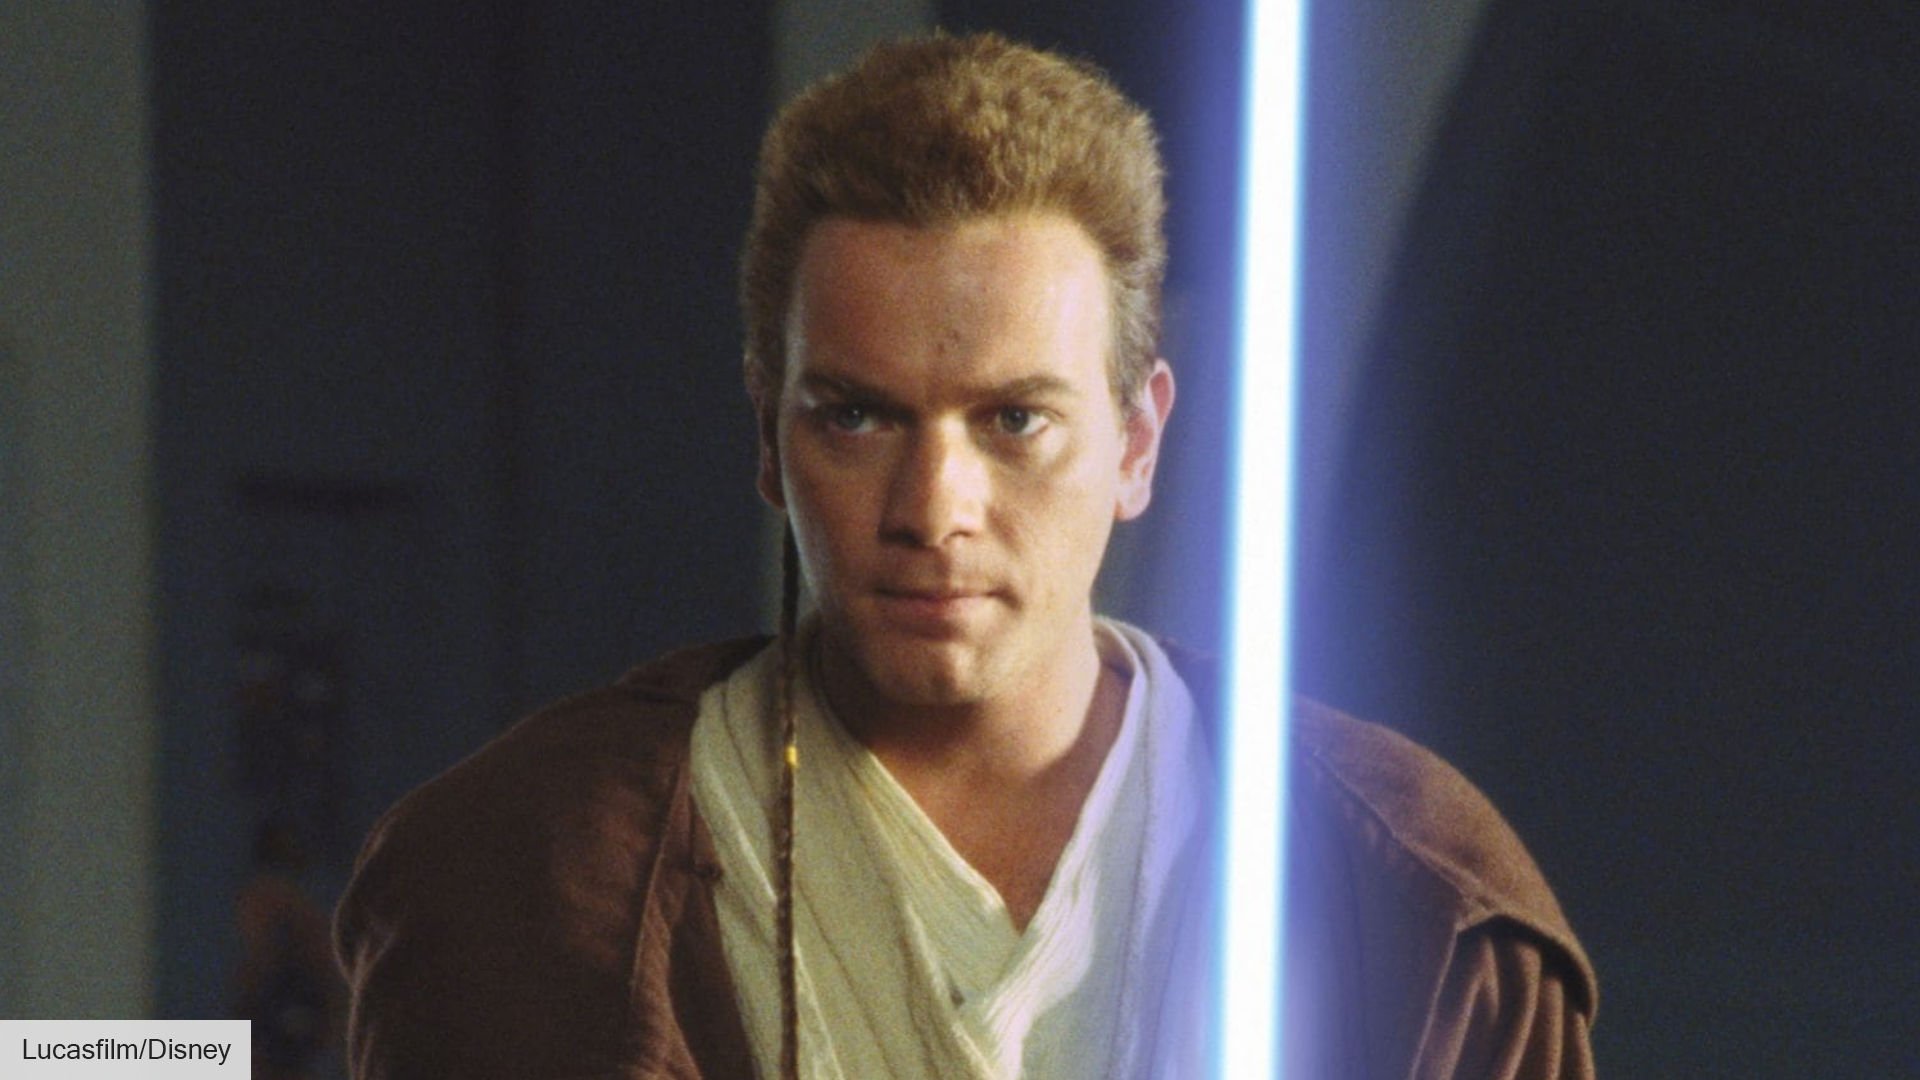 Star Wars cast: Ewan McGregor as Obi-Wan Kenobi in The Phantom Menace